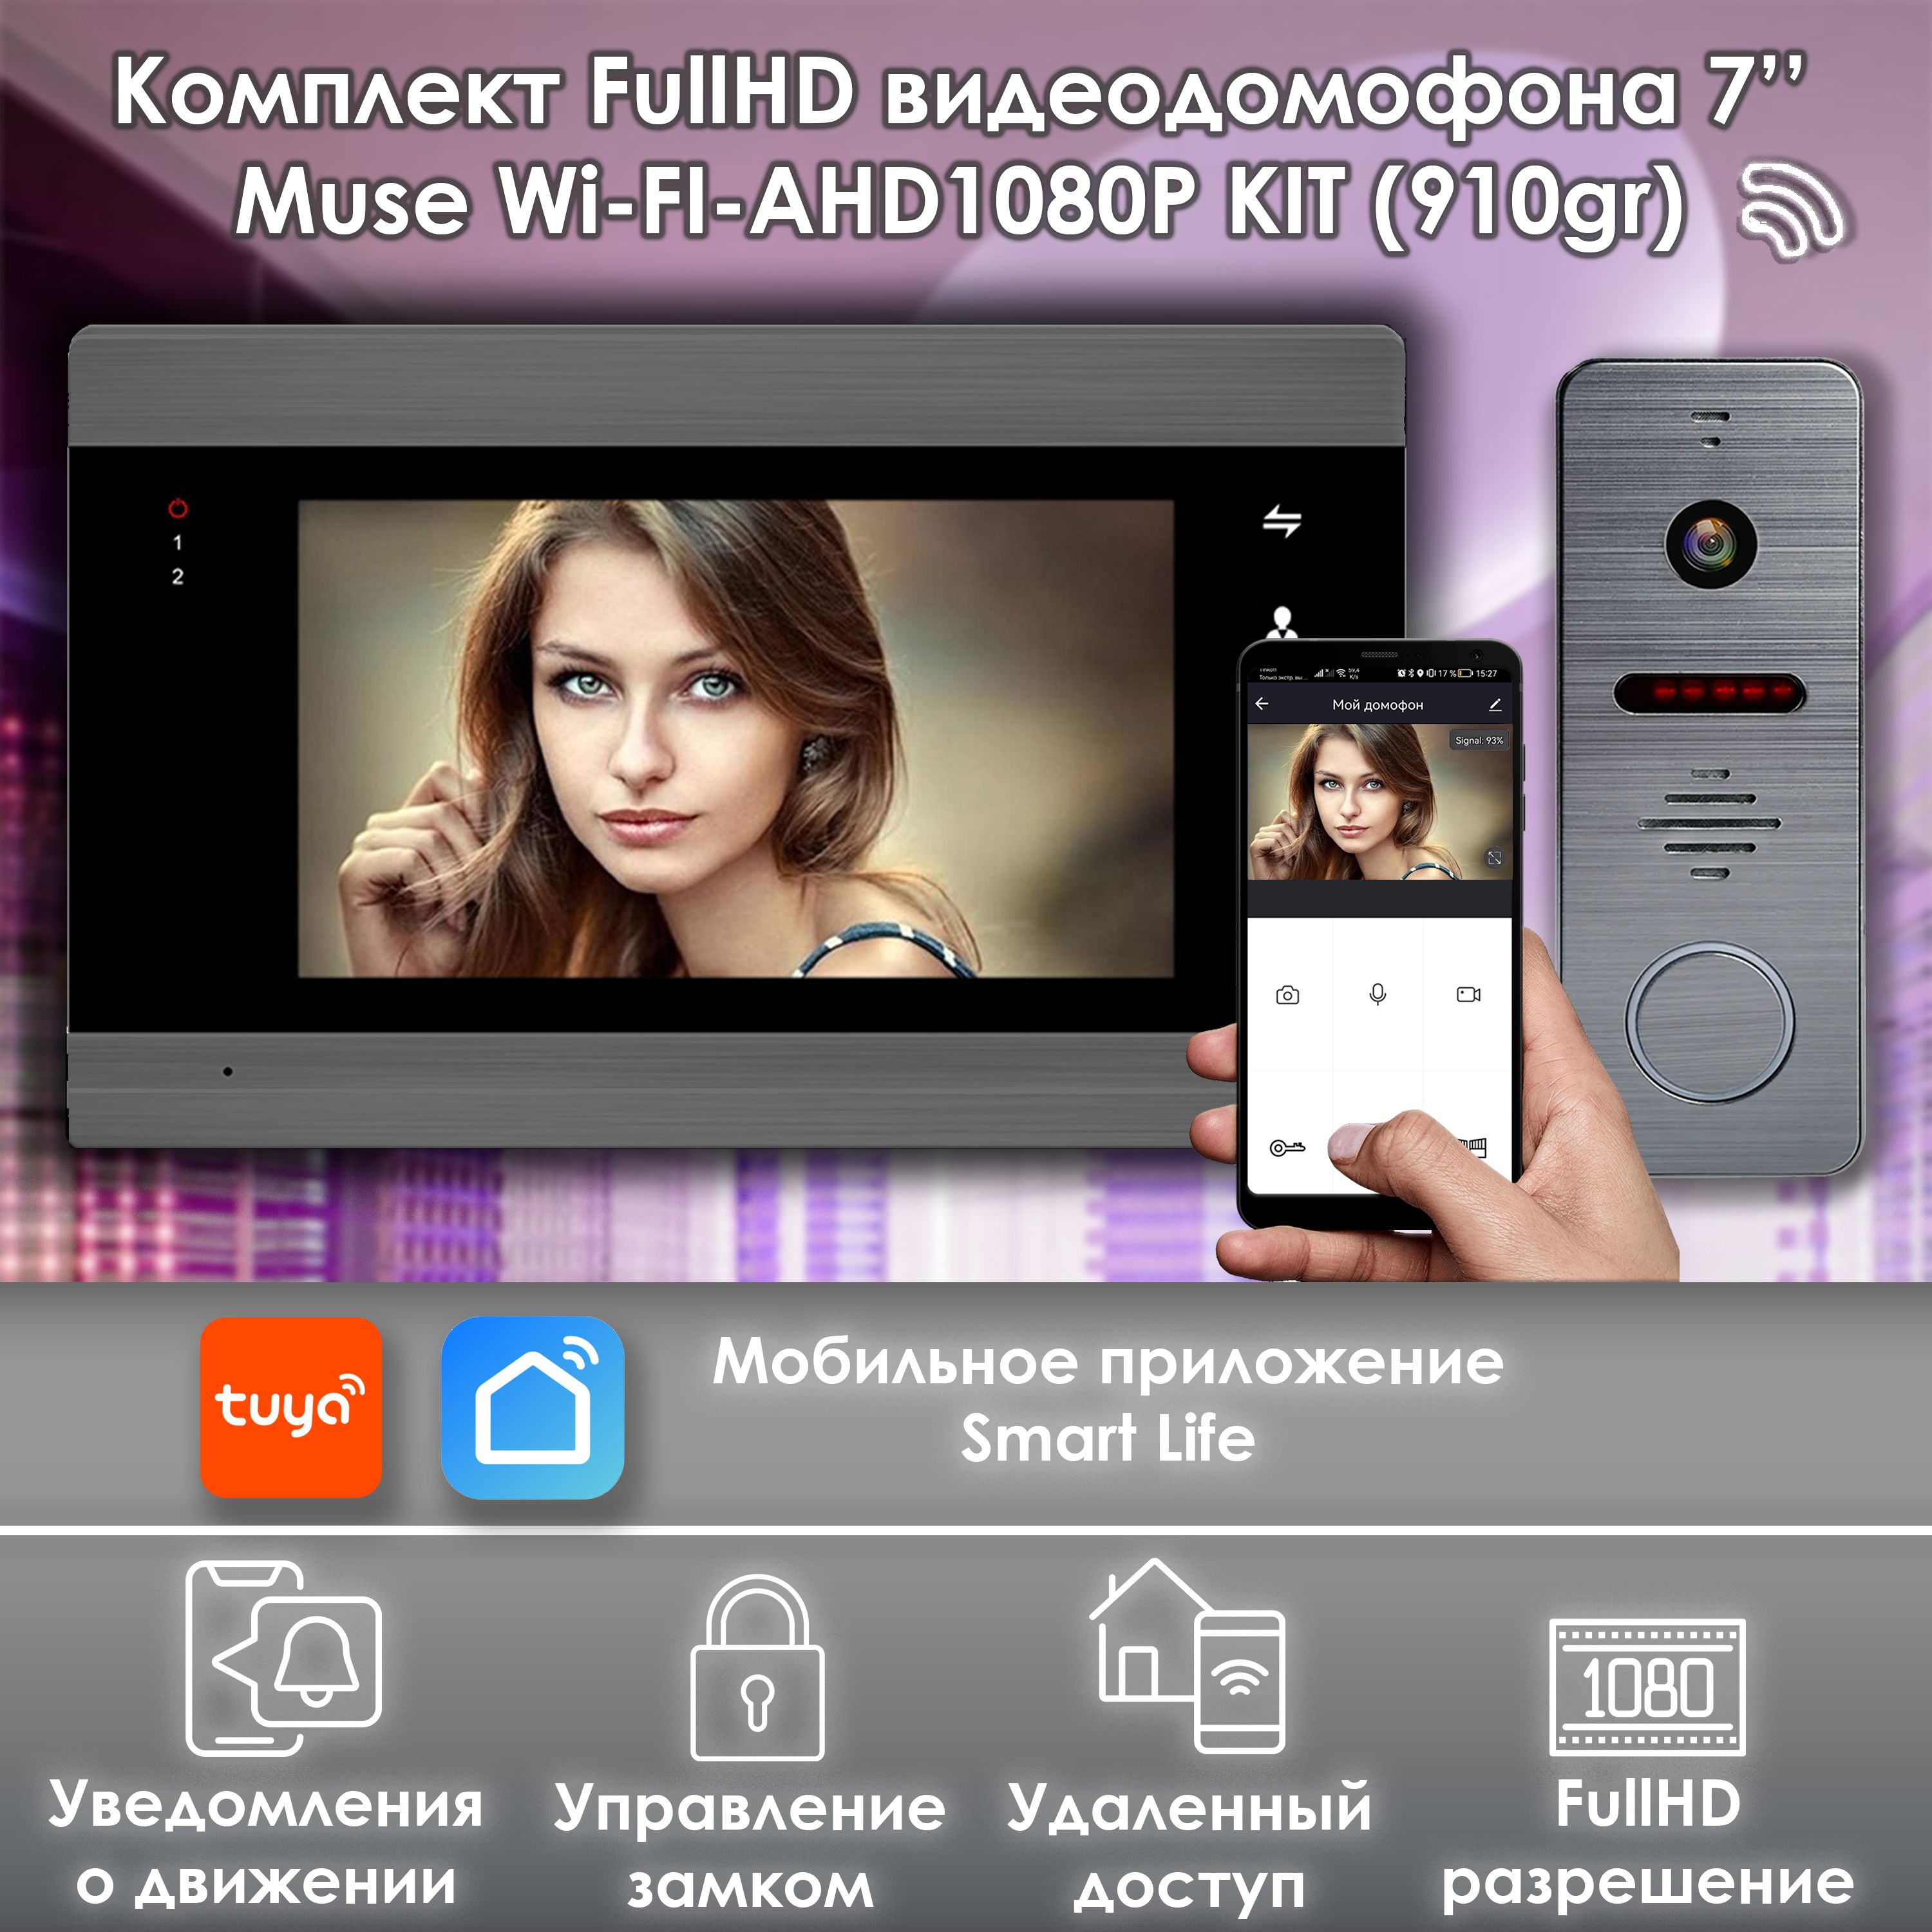 Комплект видеодомофона Alfavision MUSE WIFI-KIT FullHD (910gr) 7 дюймов комплект видеодомофона alfavision olesya wi fi ahd1080p full hd 910bl белый 7 дюймов